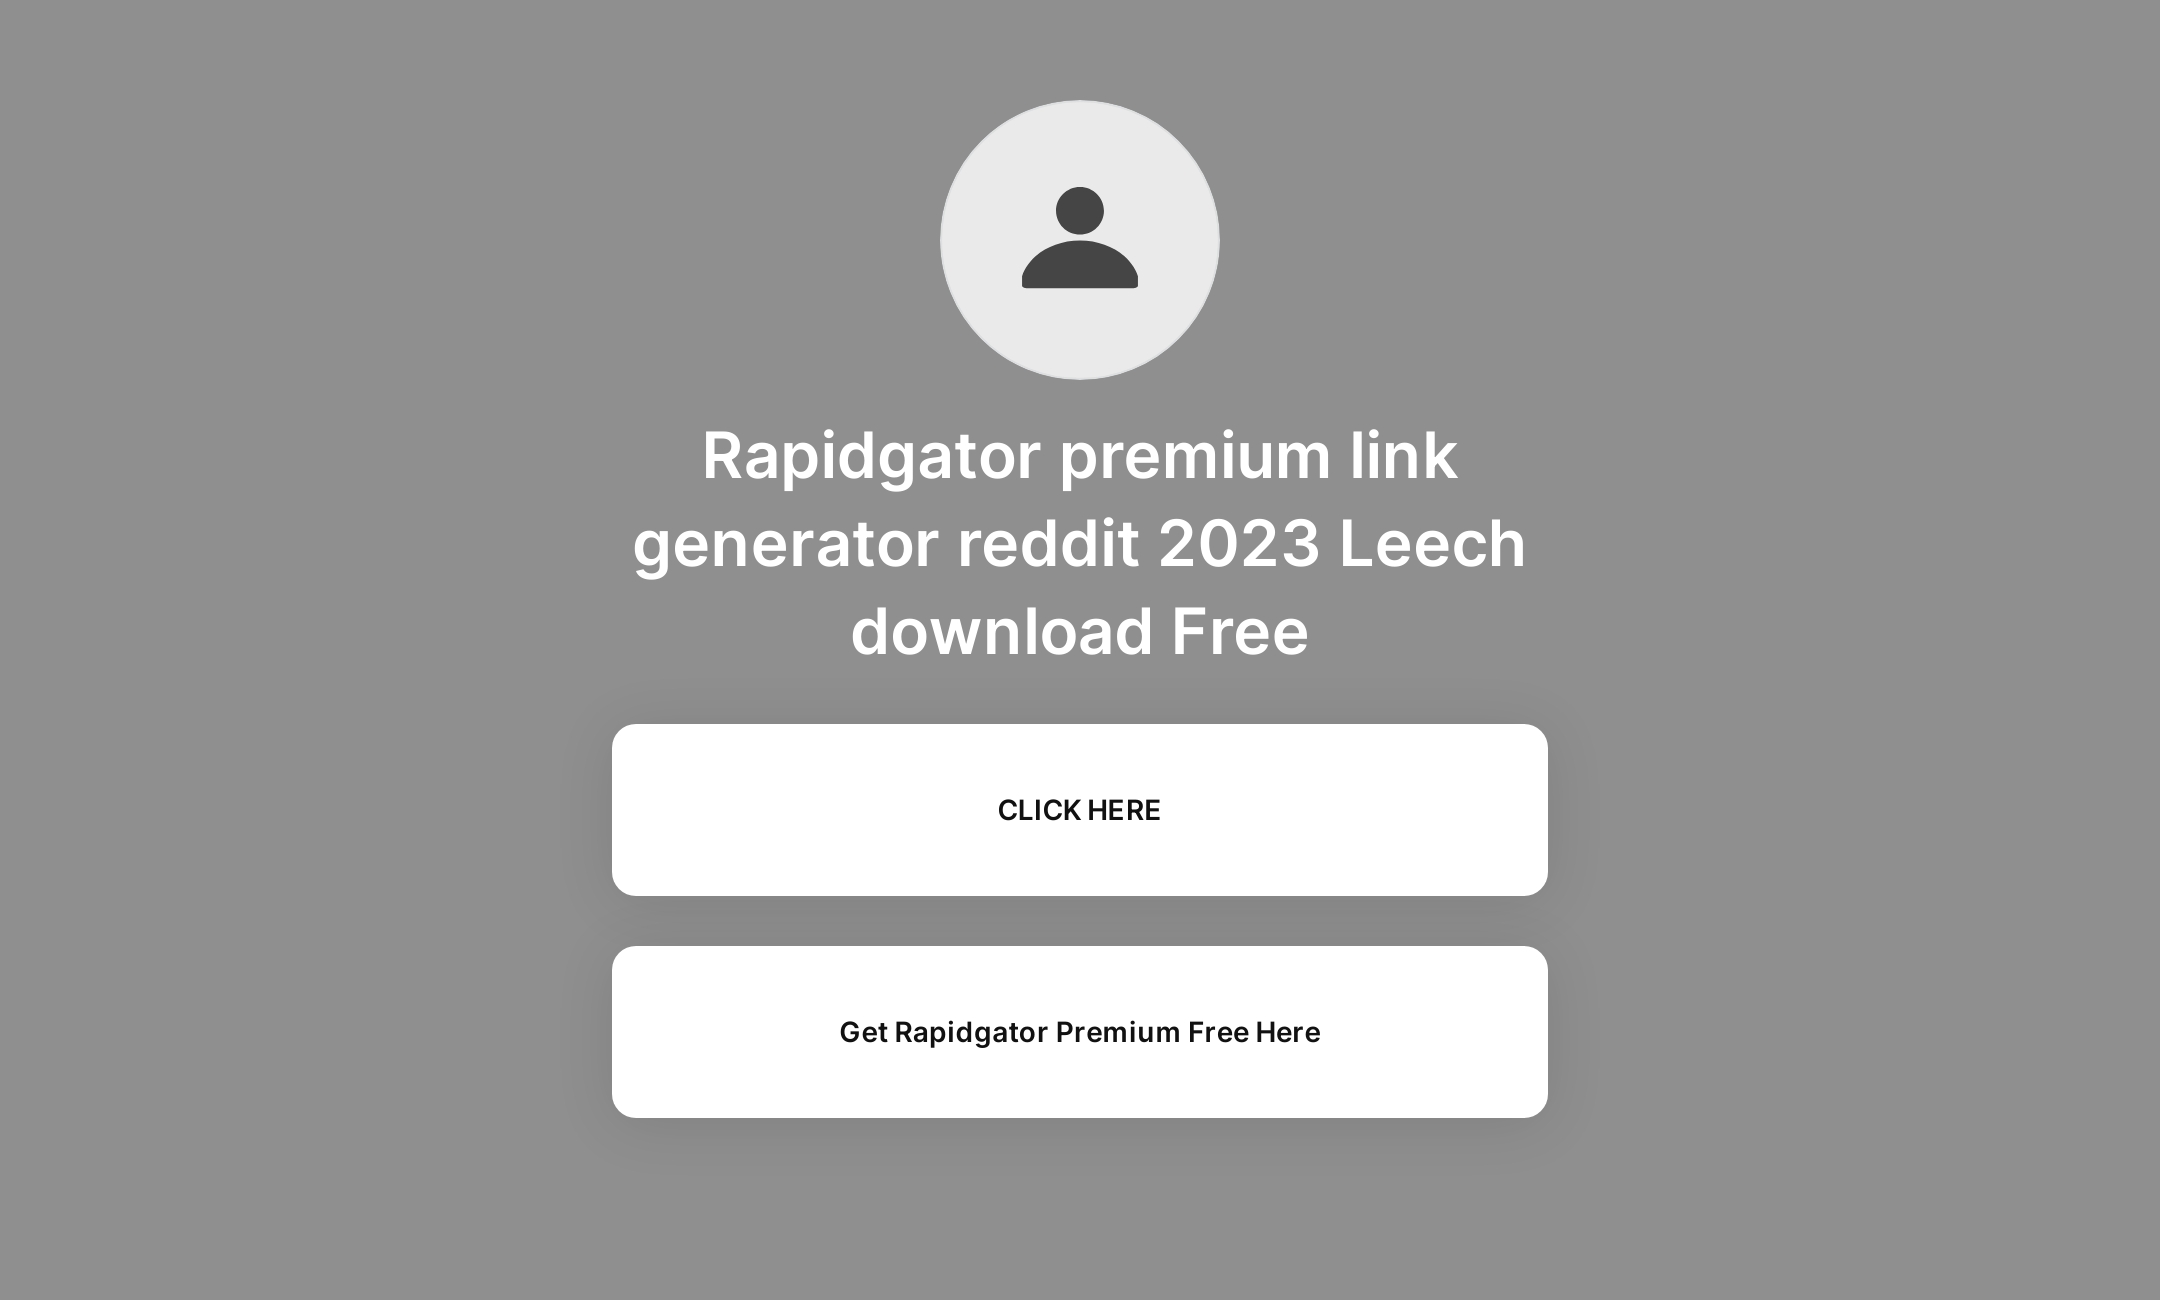 Rapidgator premium link generator reddit 2023 Leech download Free's